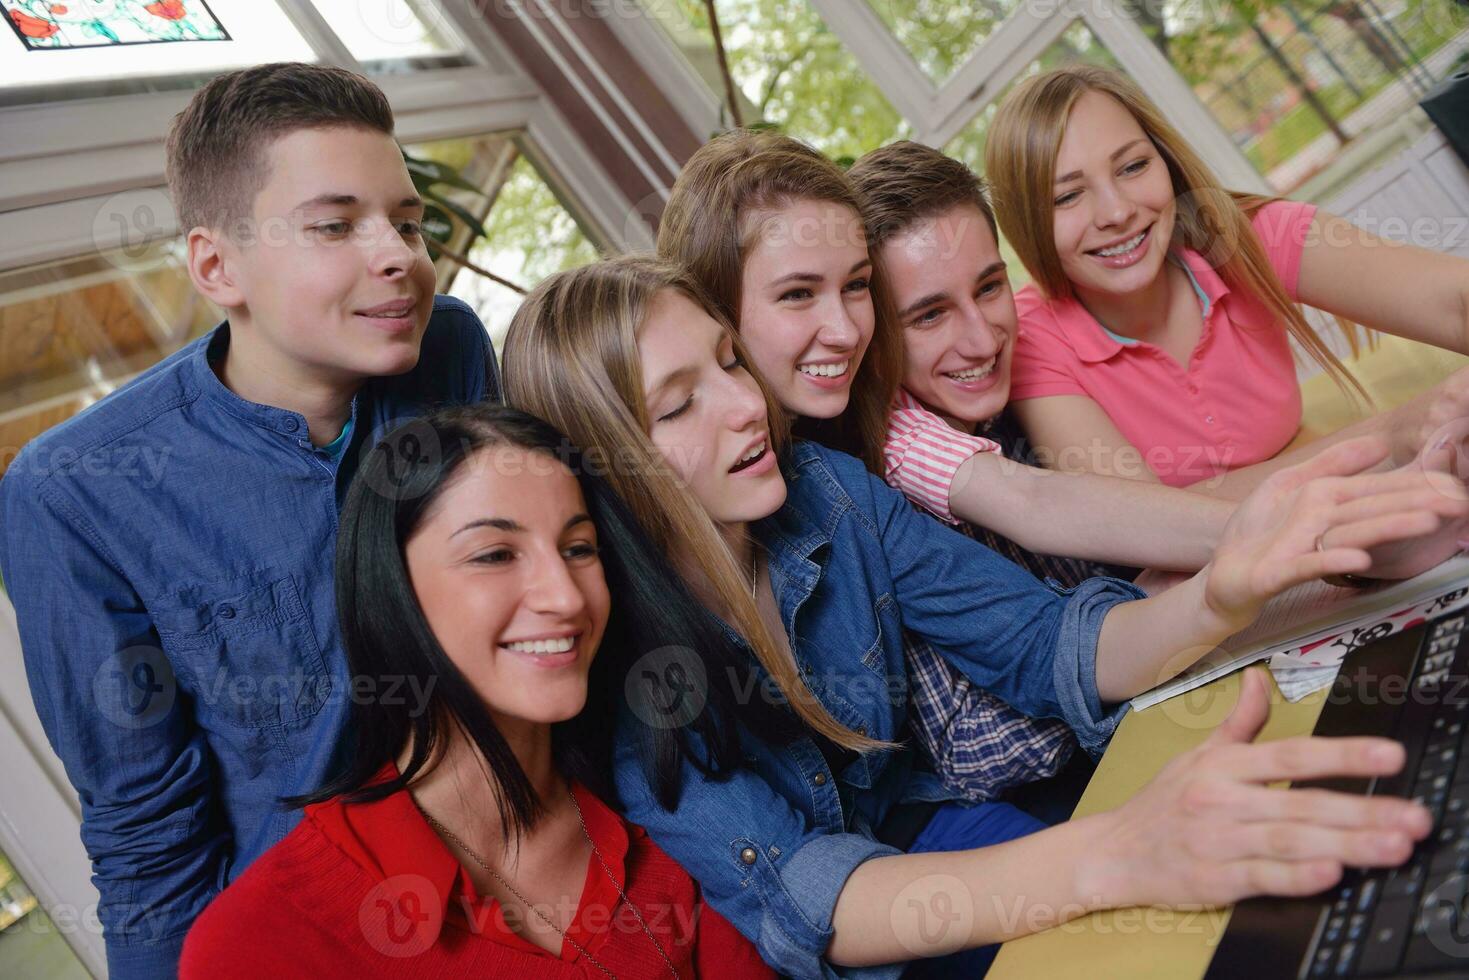 Lycklig tonåren grupp i skola foto